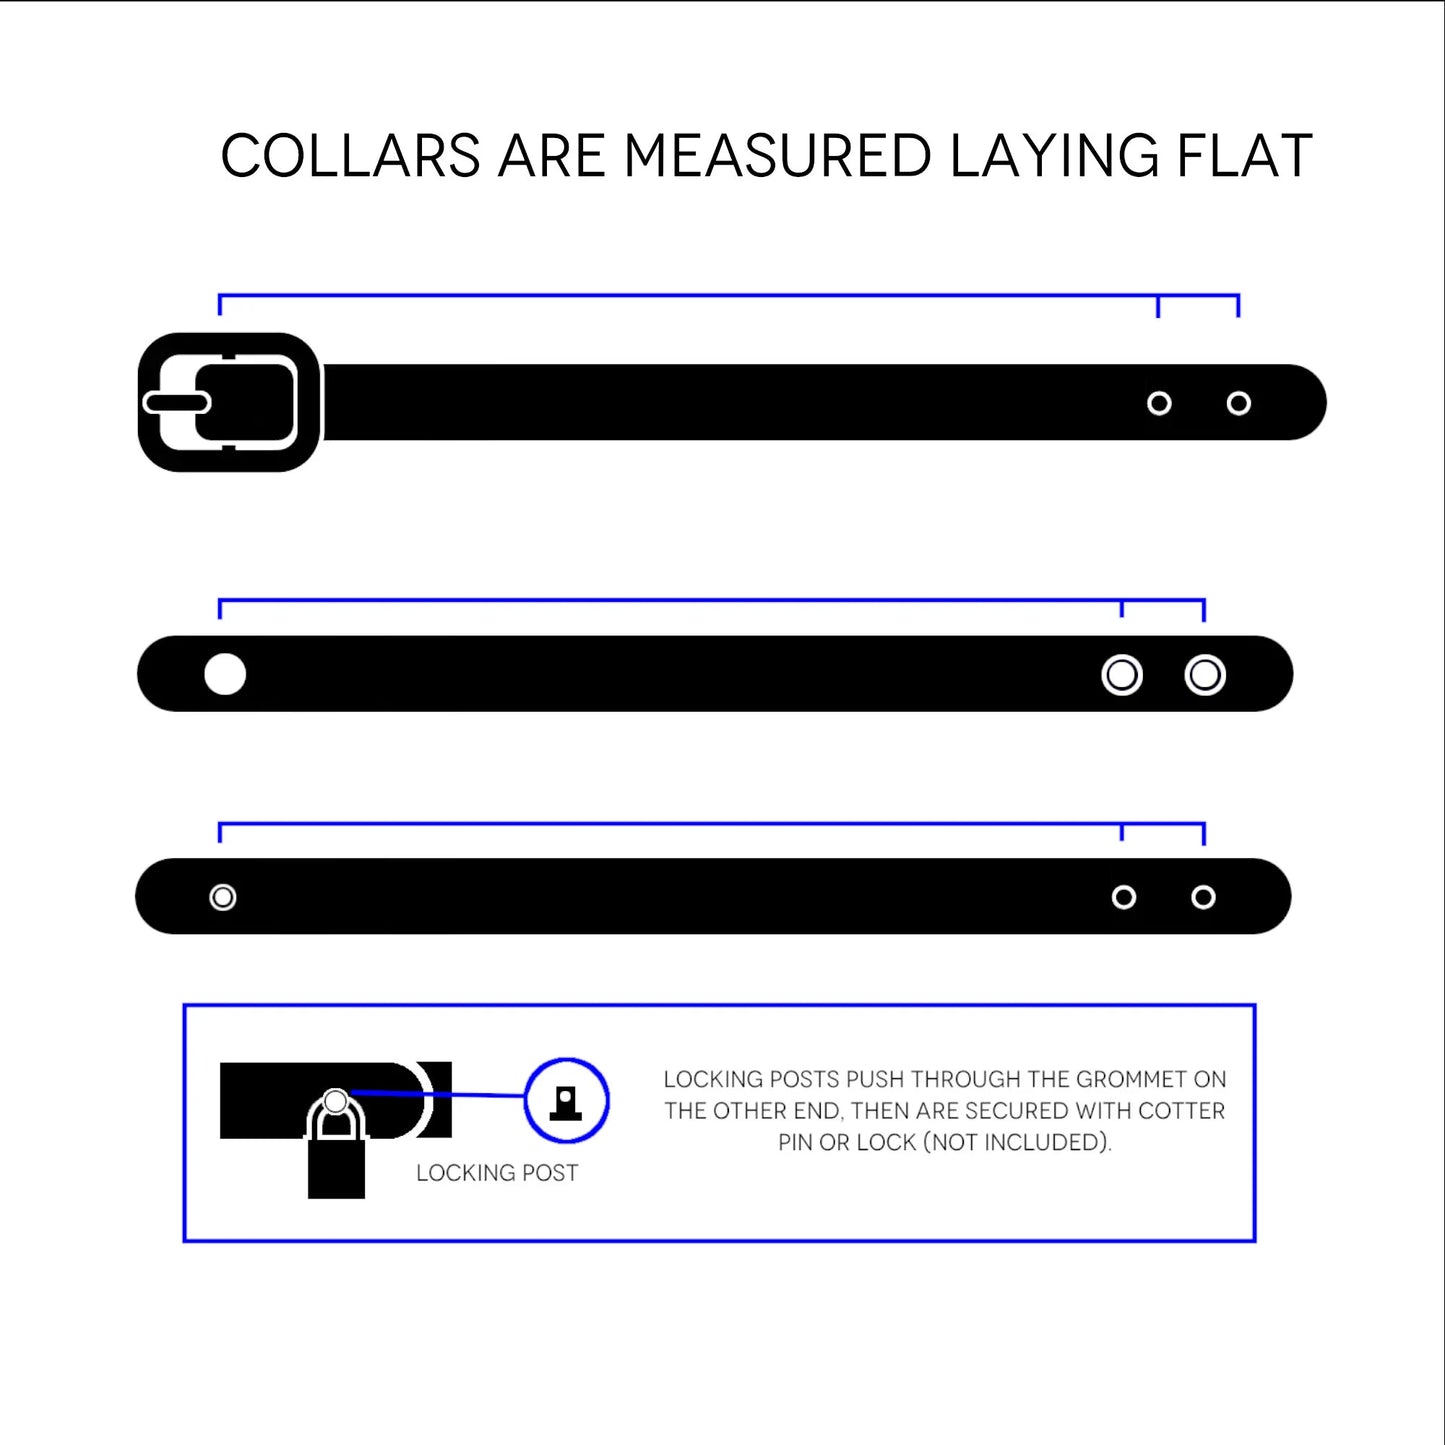 Collar measurement chart